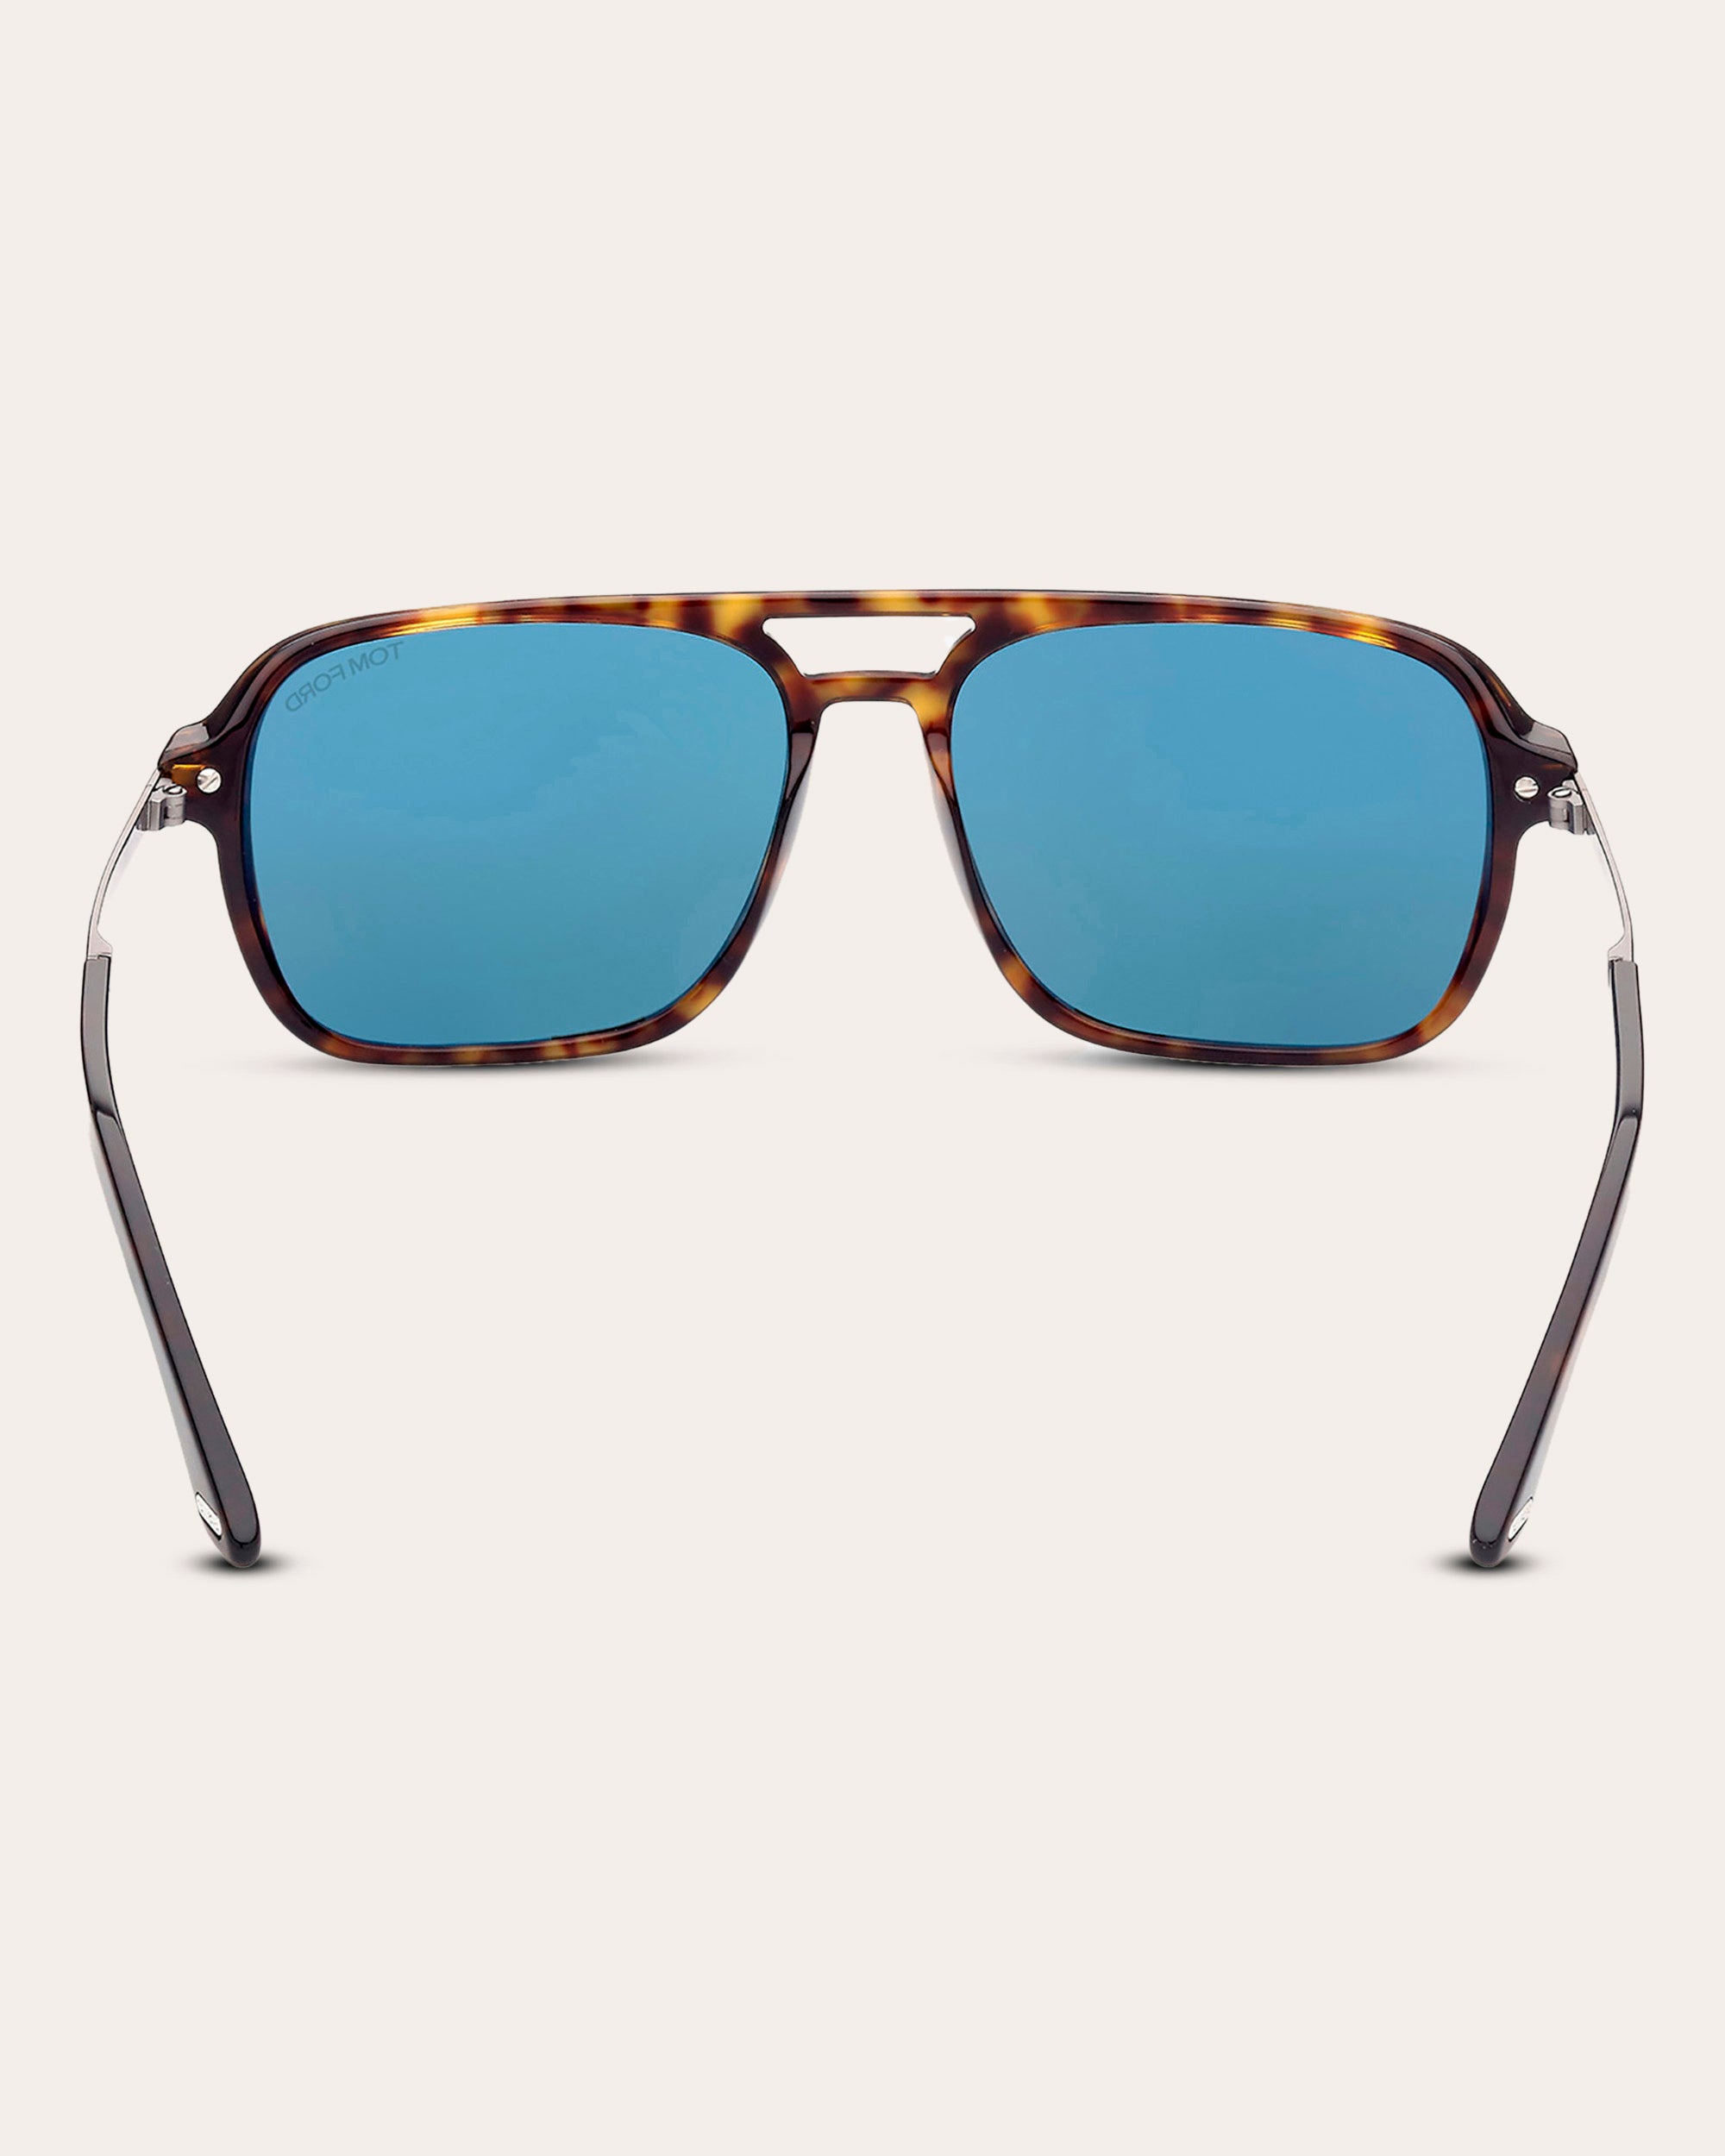 Tom Ford Crosby Navigator Sunglasses | Olivela